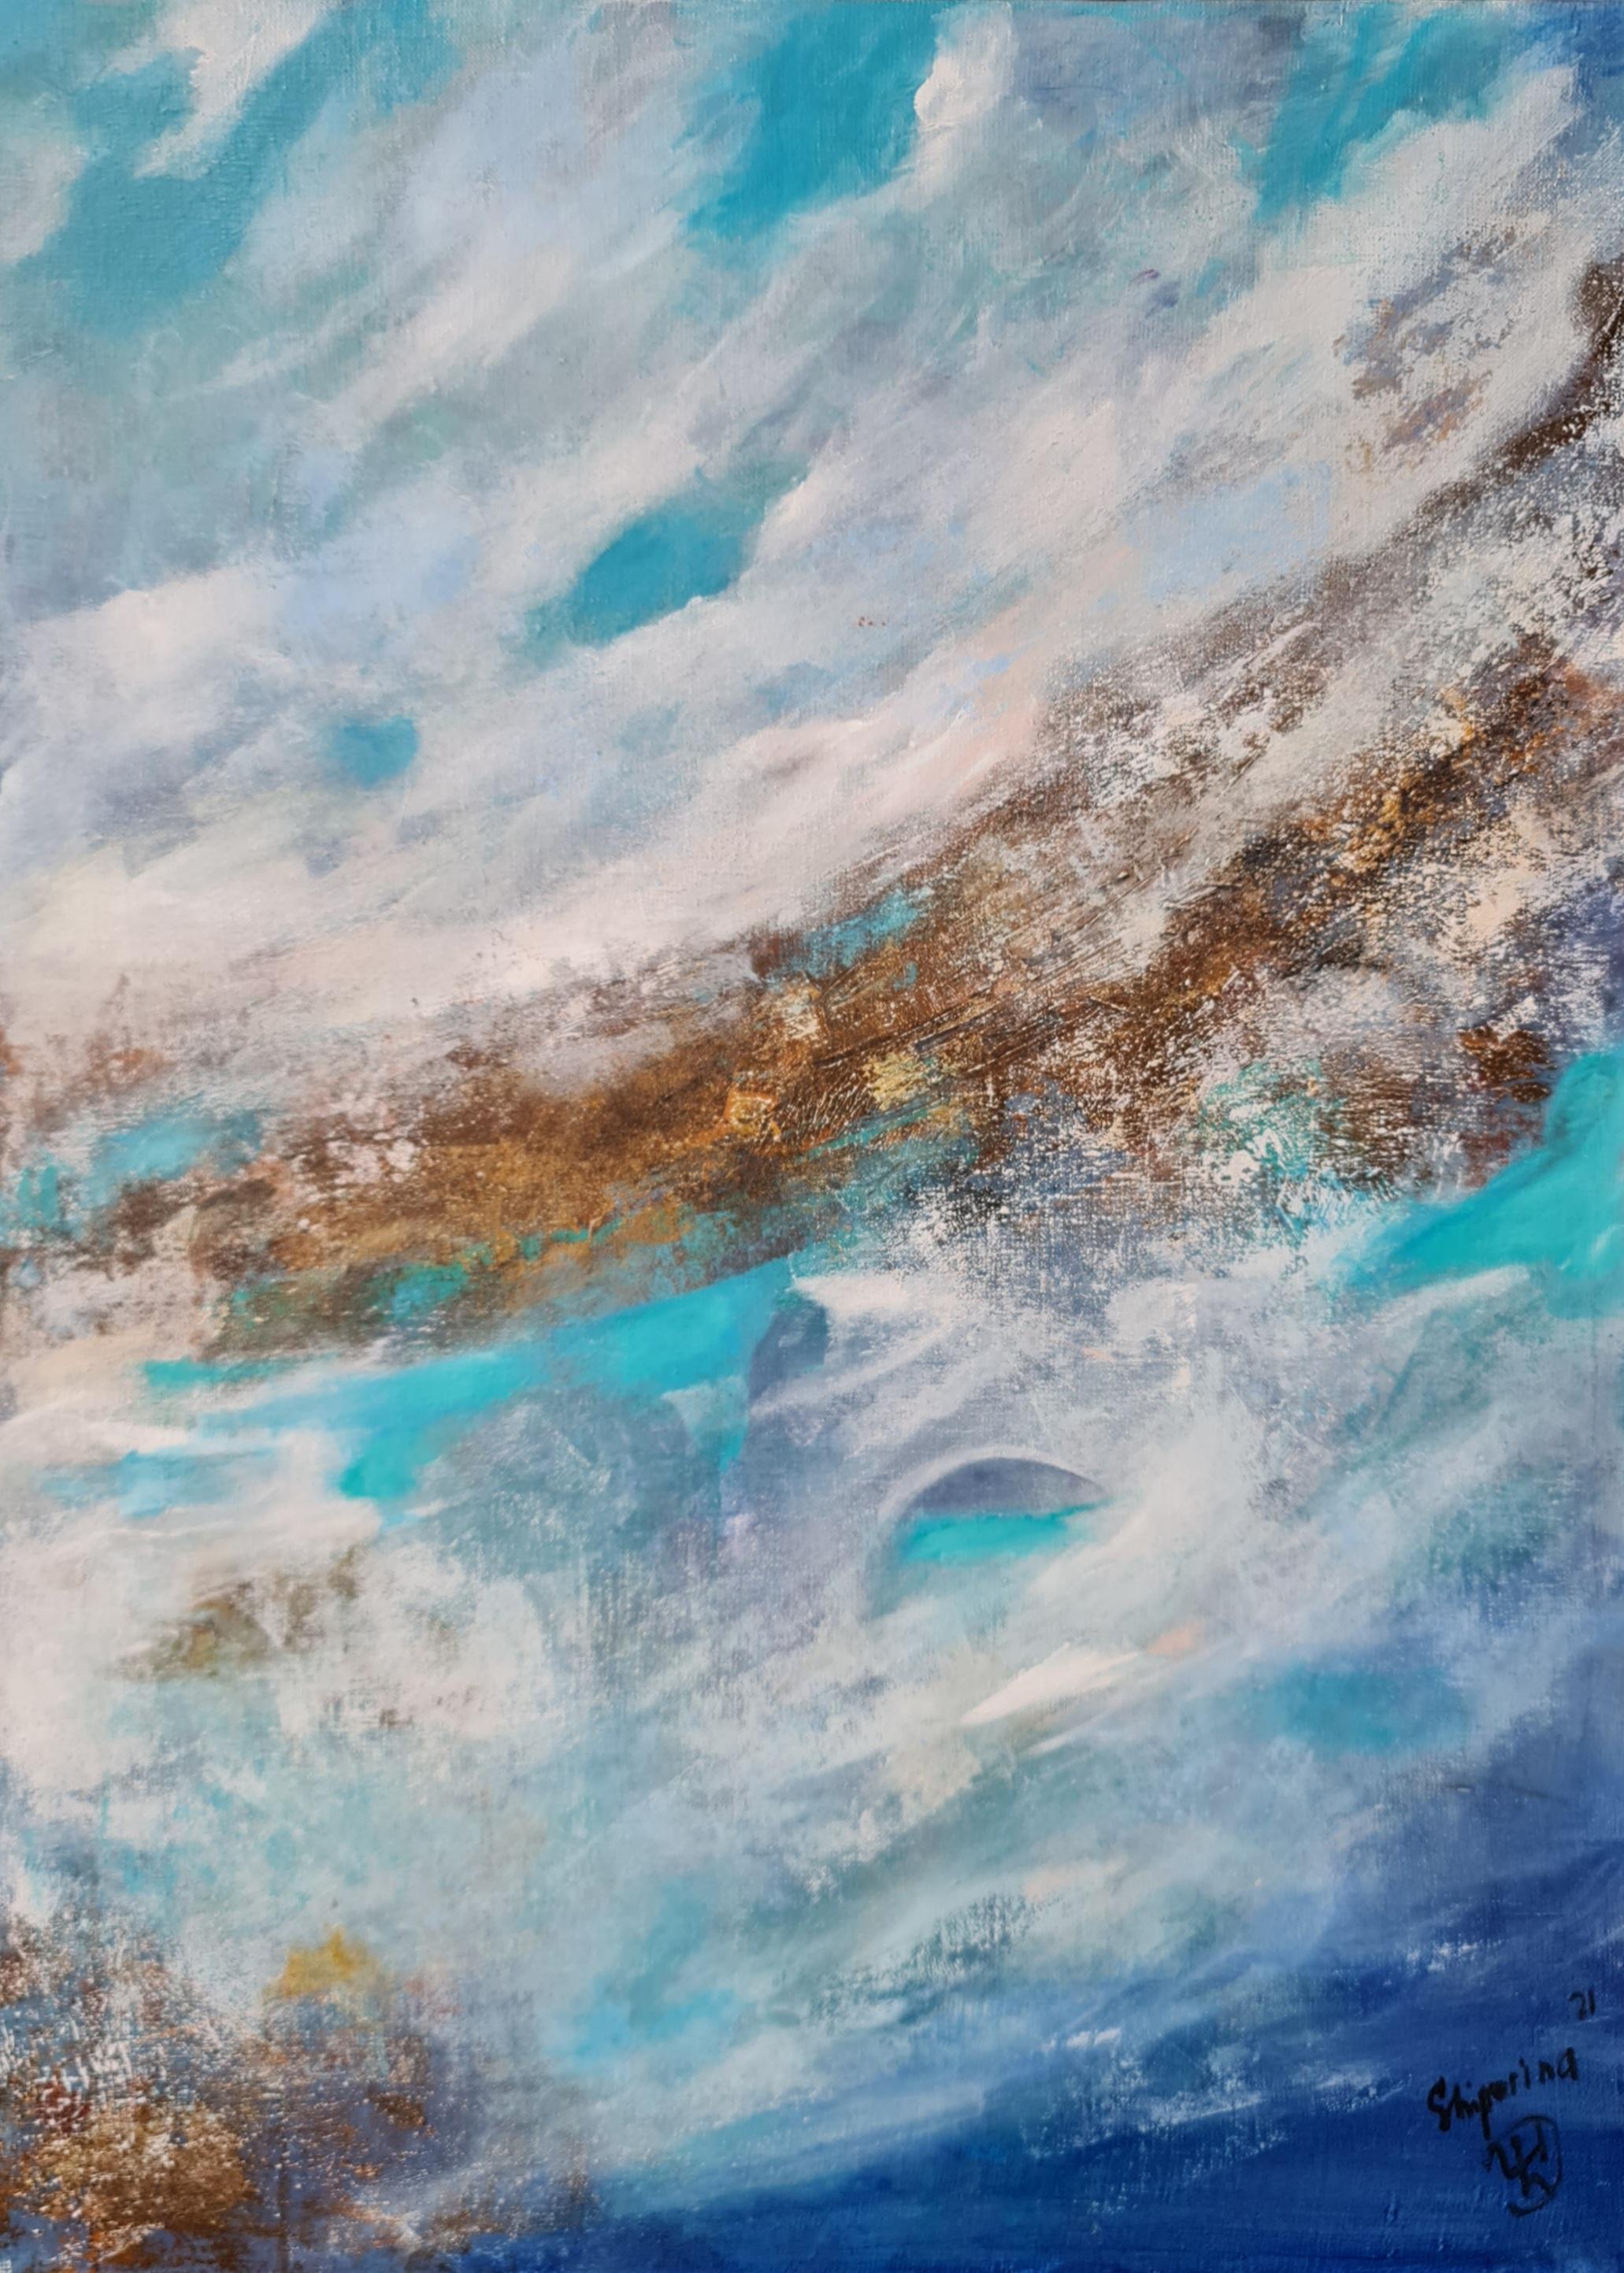 Landscape Painting Natalie Shiporina - Peinture abstraite moderne sur toile ciel/abstraction mer de Natalia Shiporin